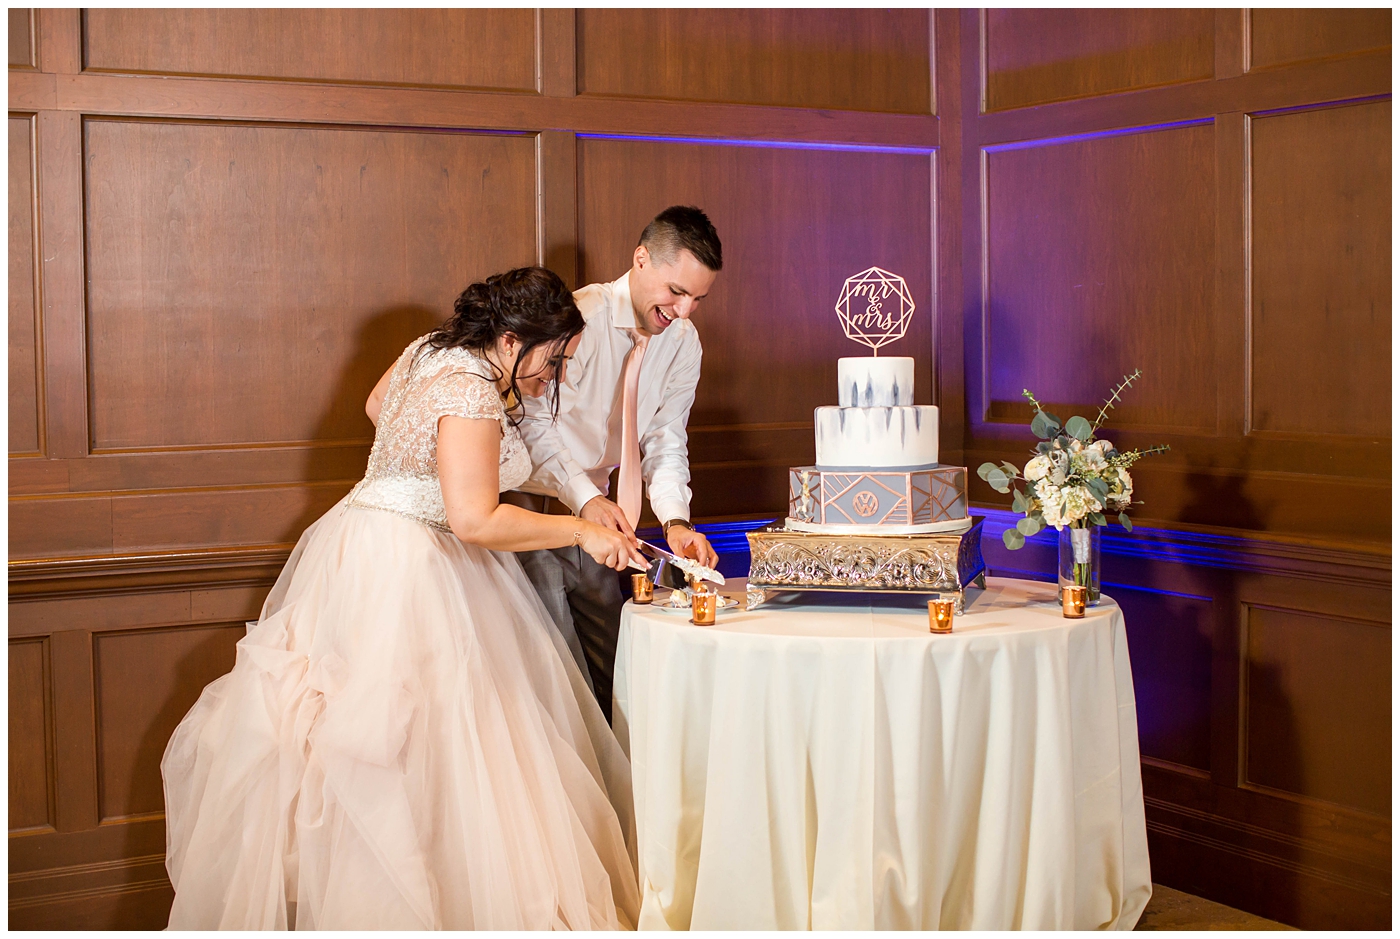 Bride and Groom cutting geometric cake